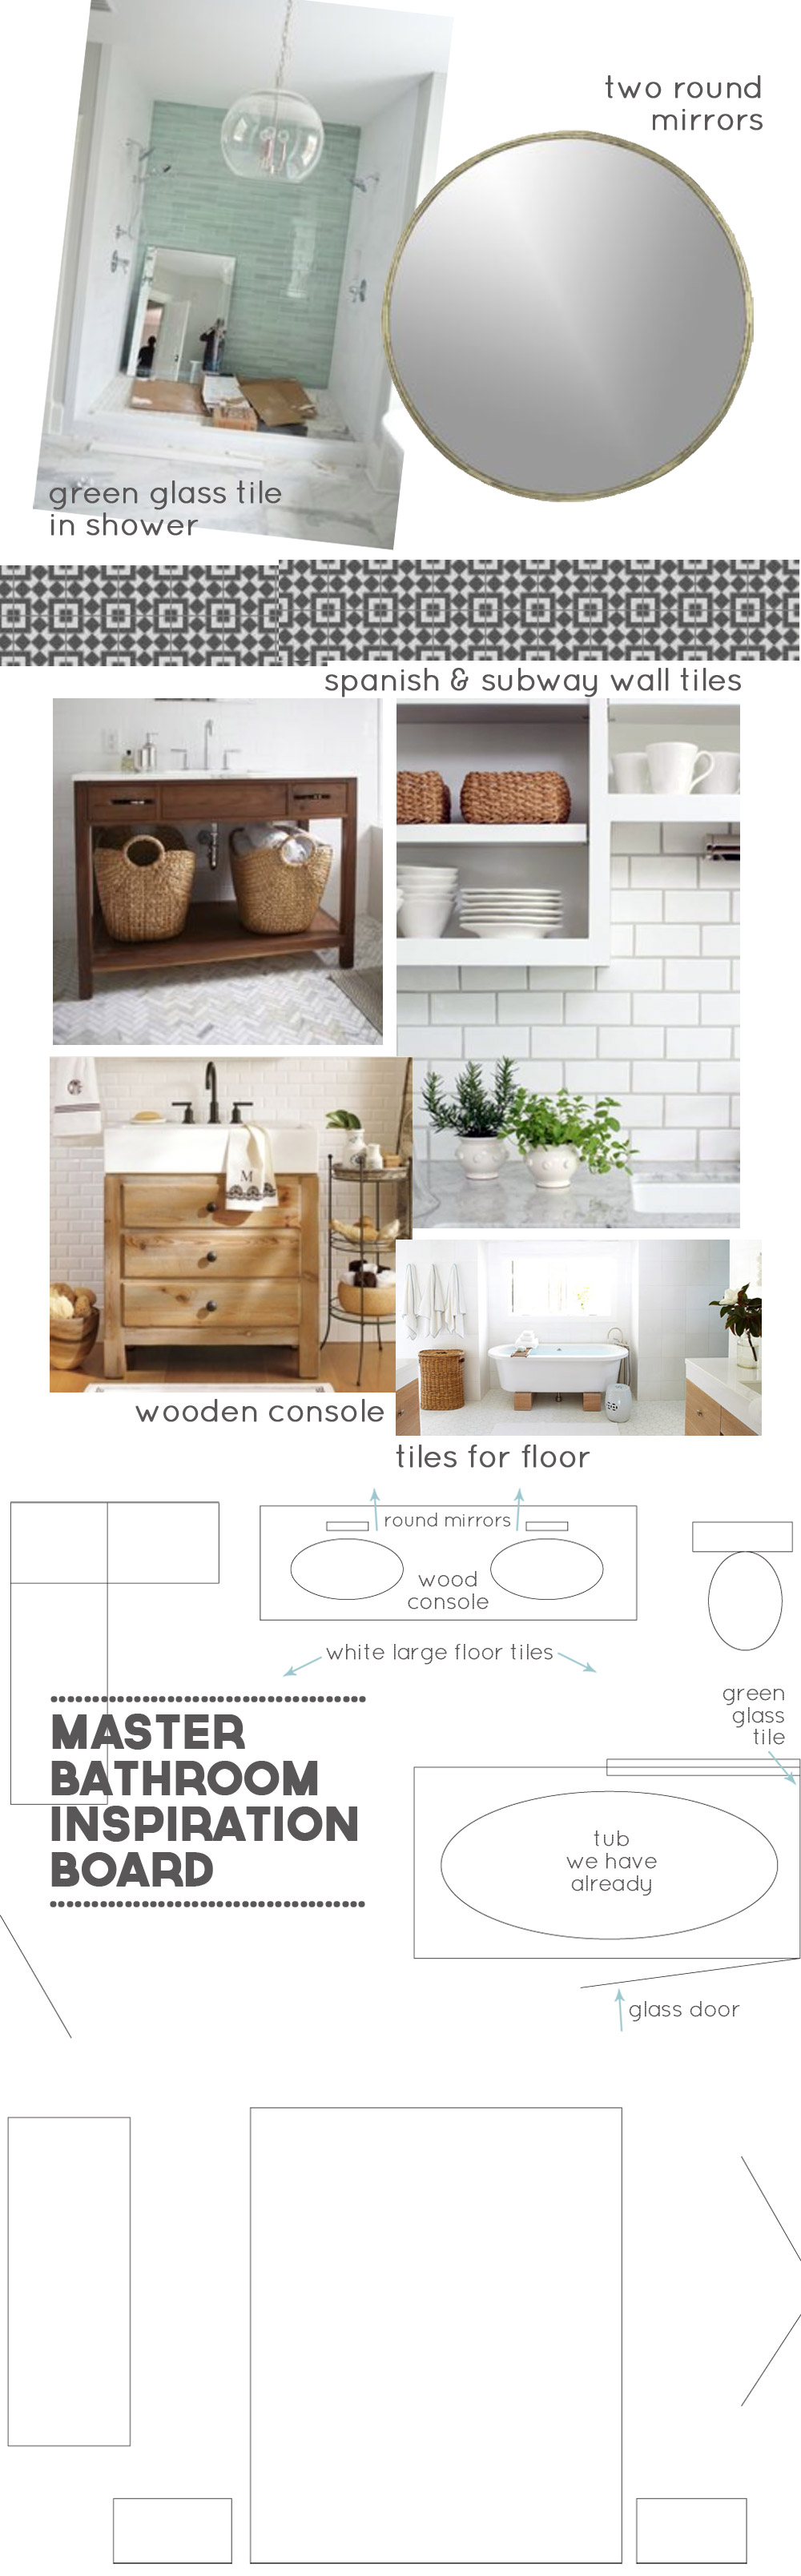 Master Bathroom Inspiration Board | PepperDesignBlog.com